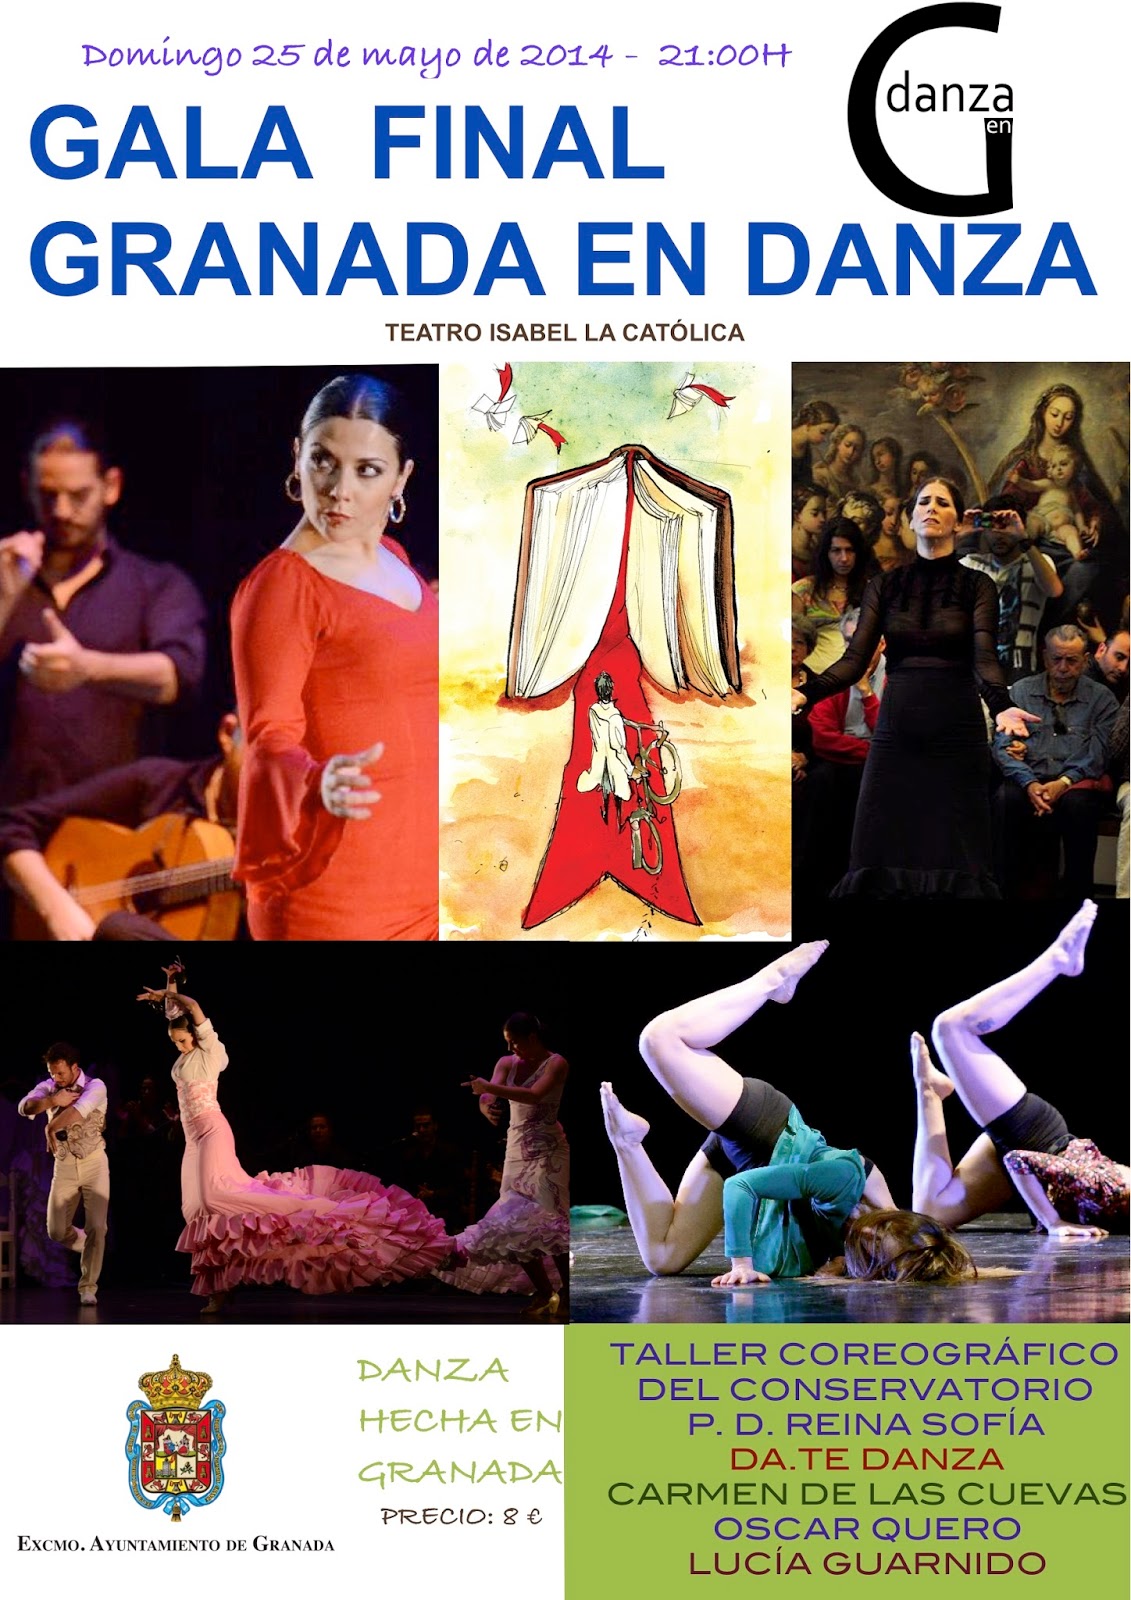 http://flamenco-sitio.com/sgk/image/GALA2014GRANADA%20EN%20DANZA.2.jpg